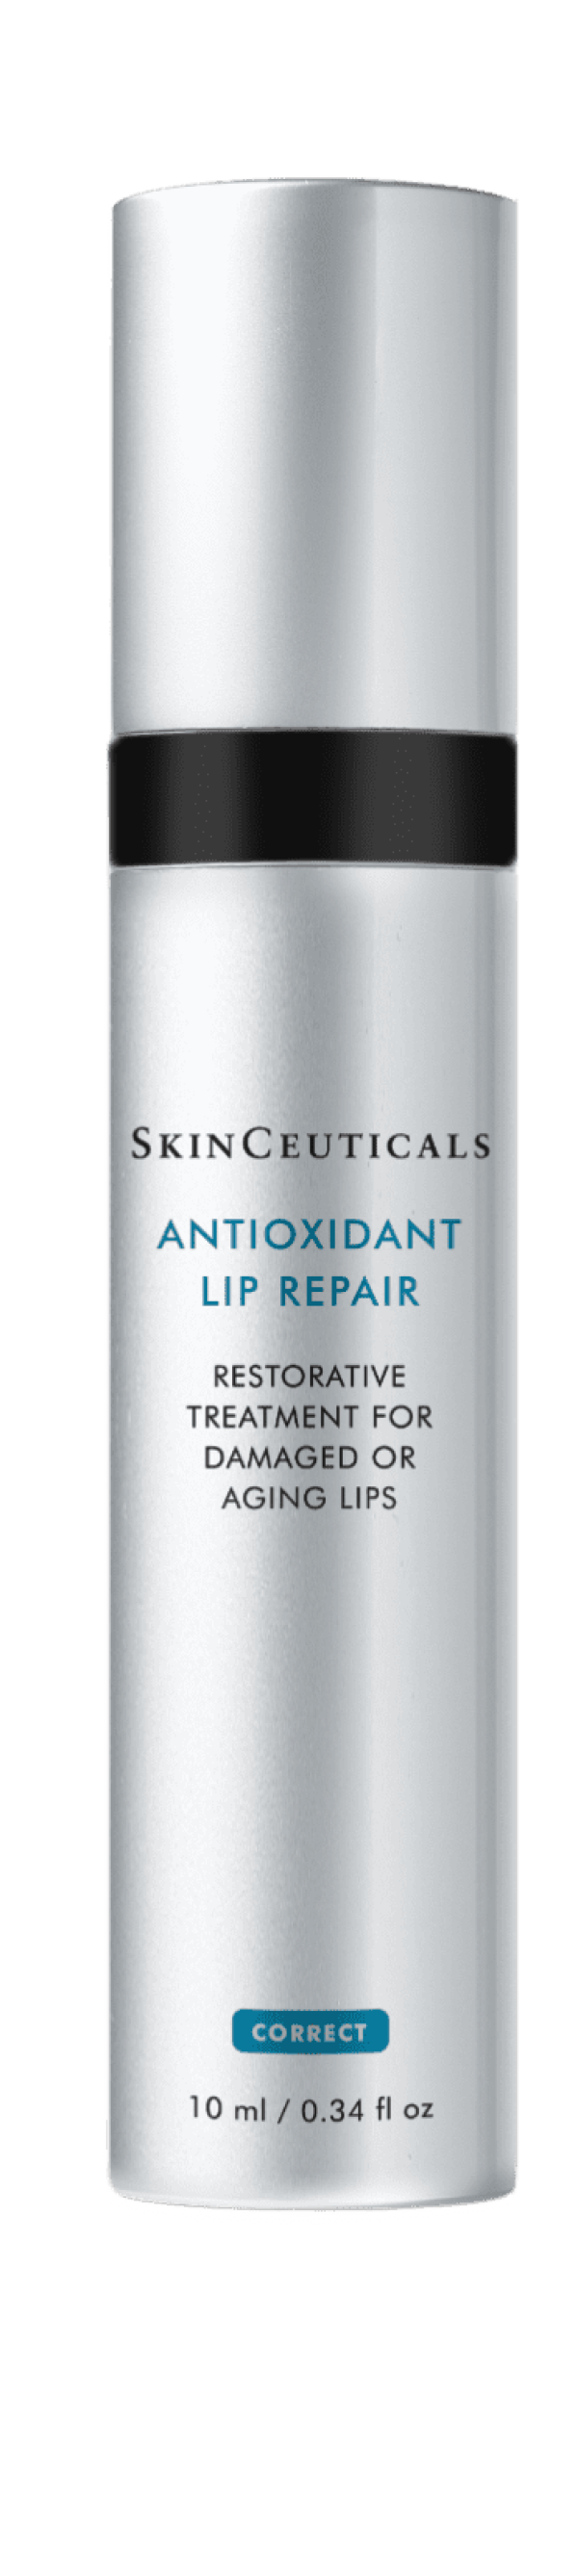 Antioxidant Lip Repair